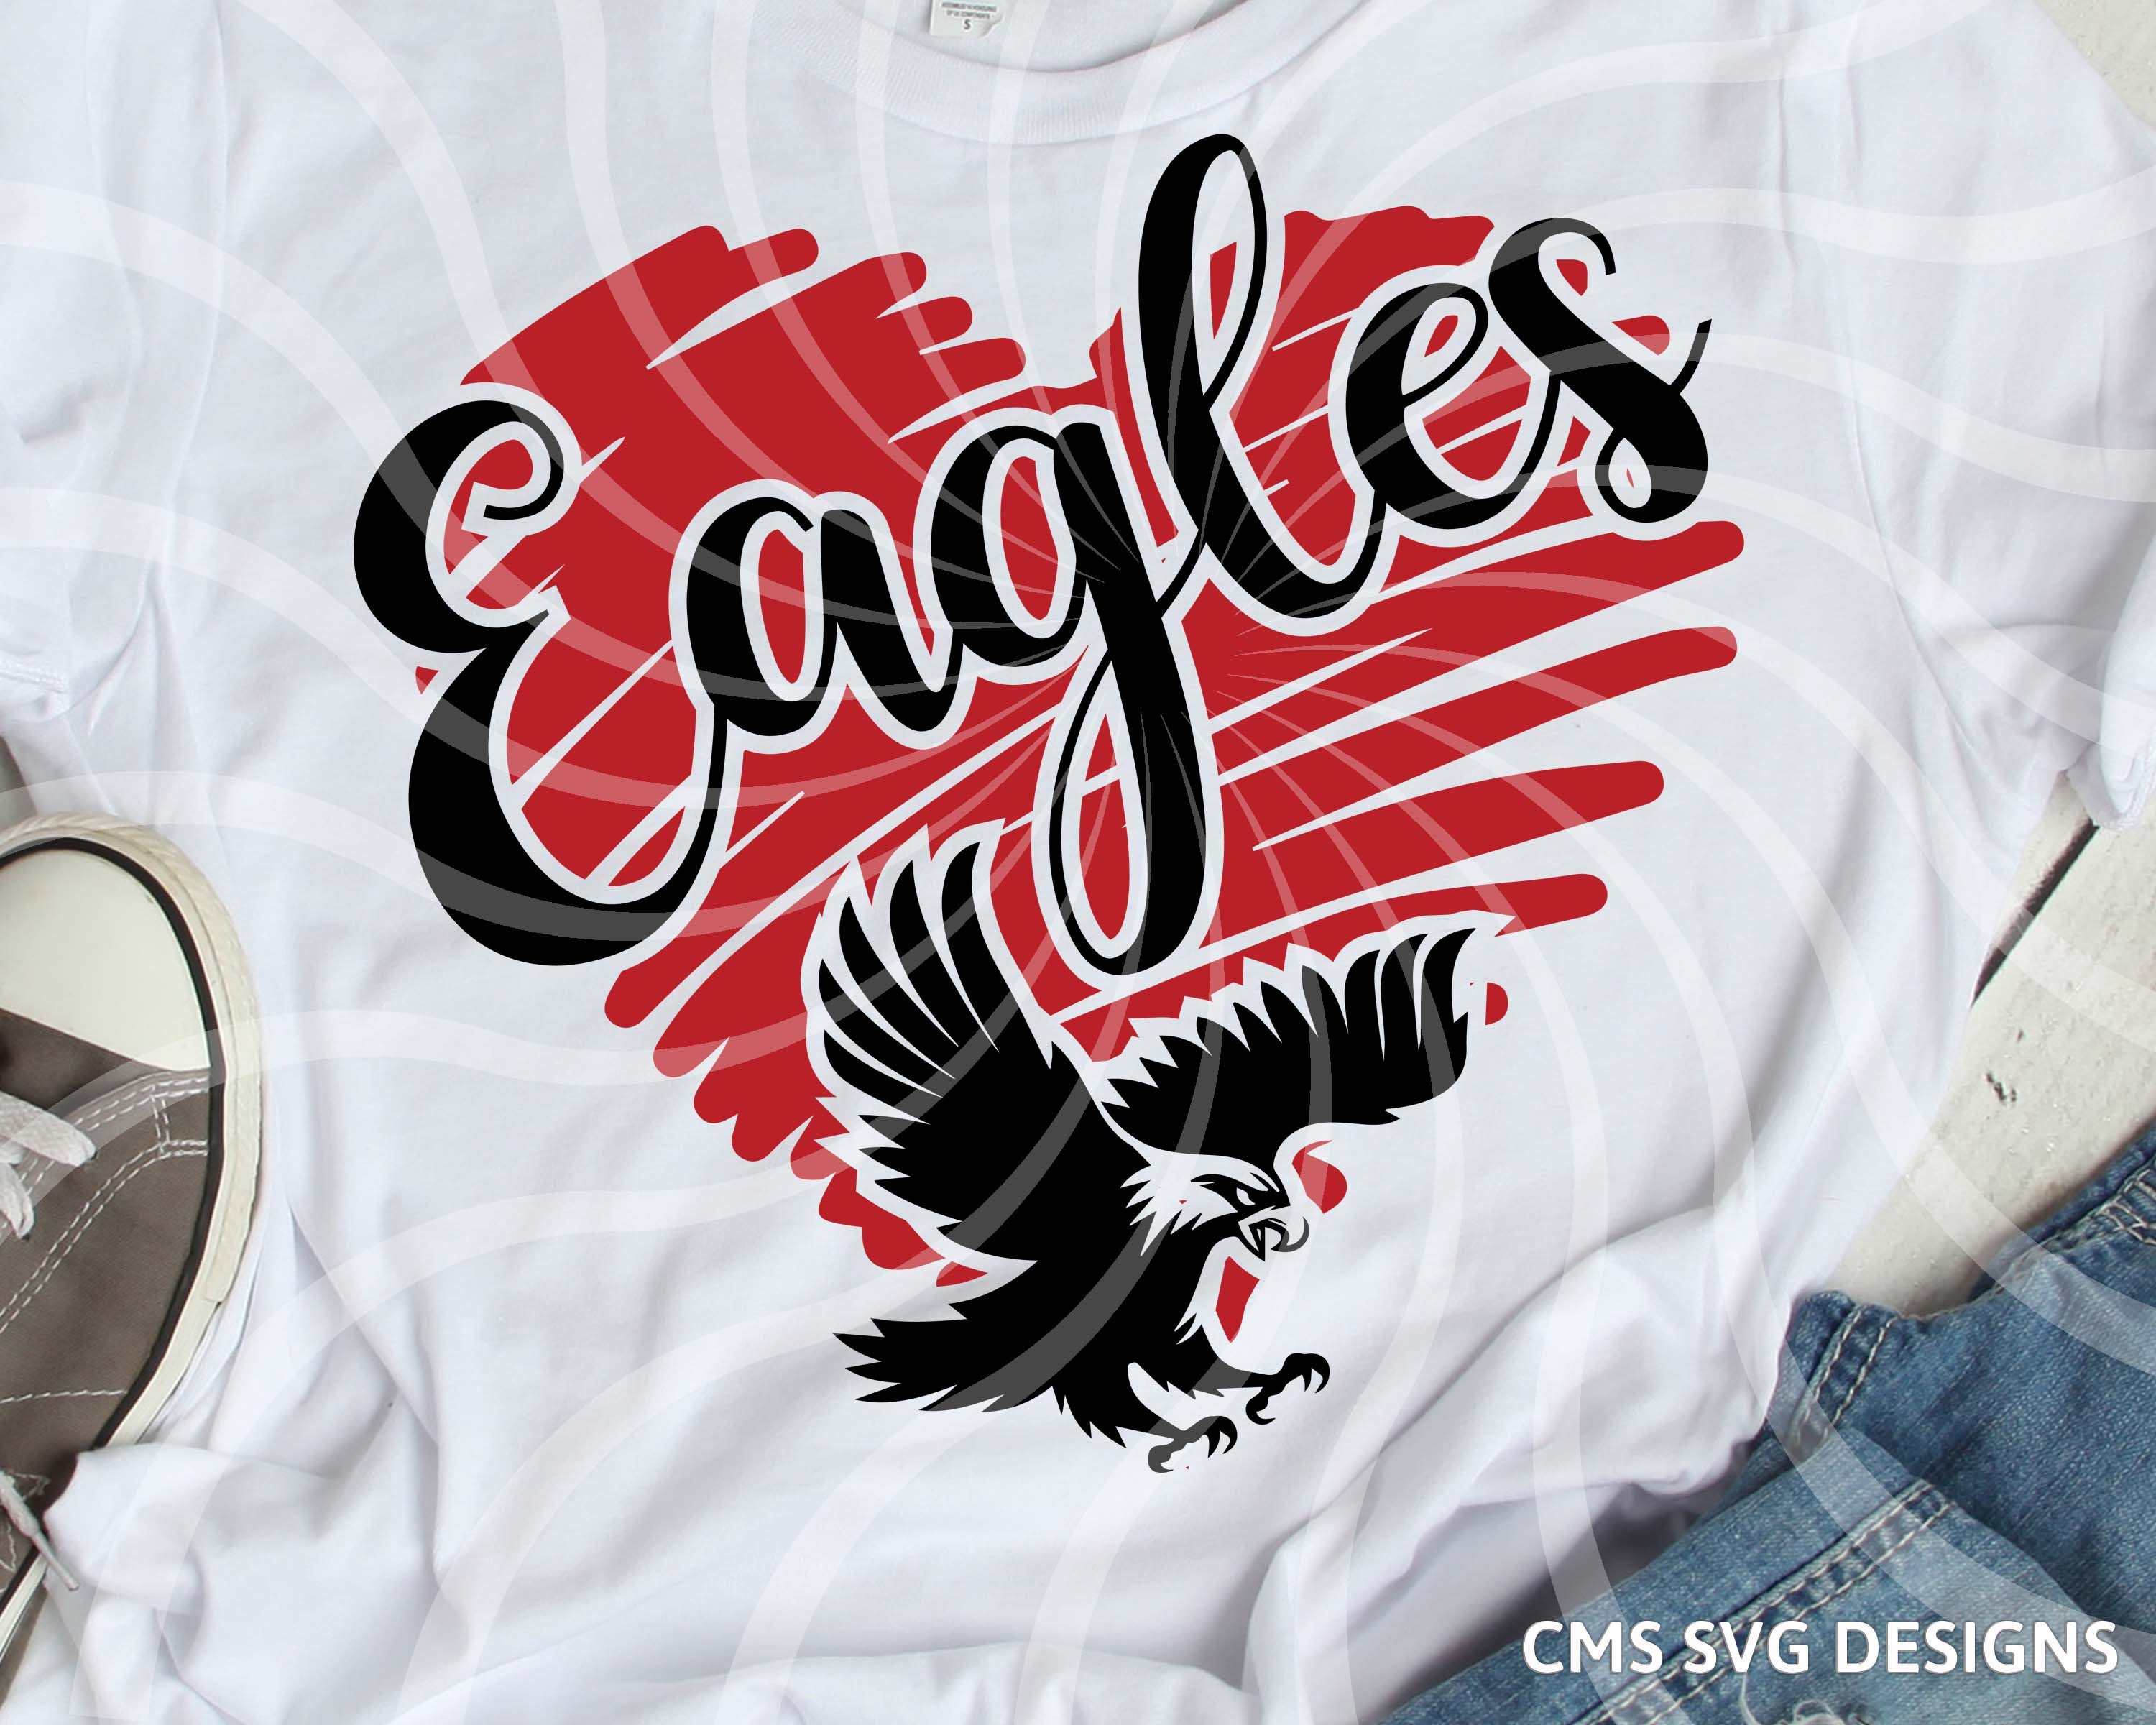 Eagles Shirts Eagles Spirit Shirt Sports Shirt Leopard 